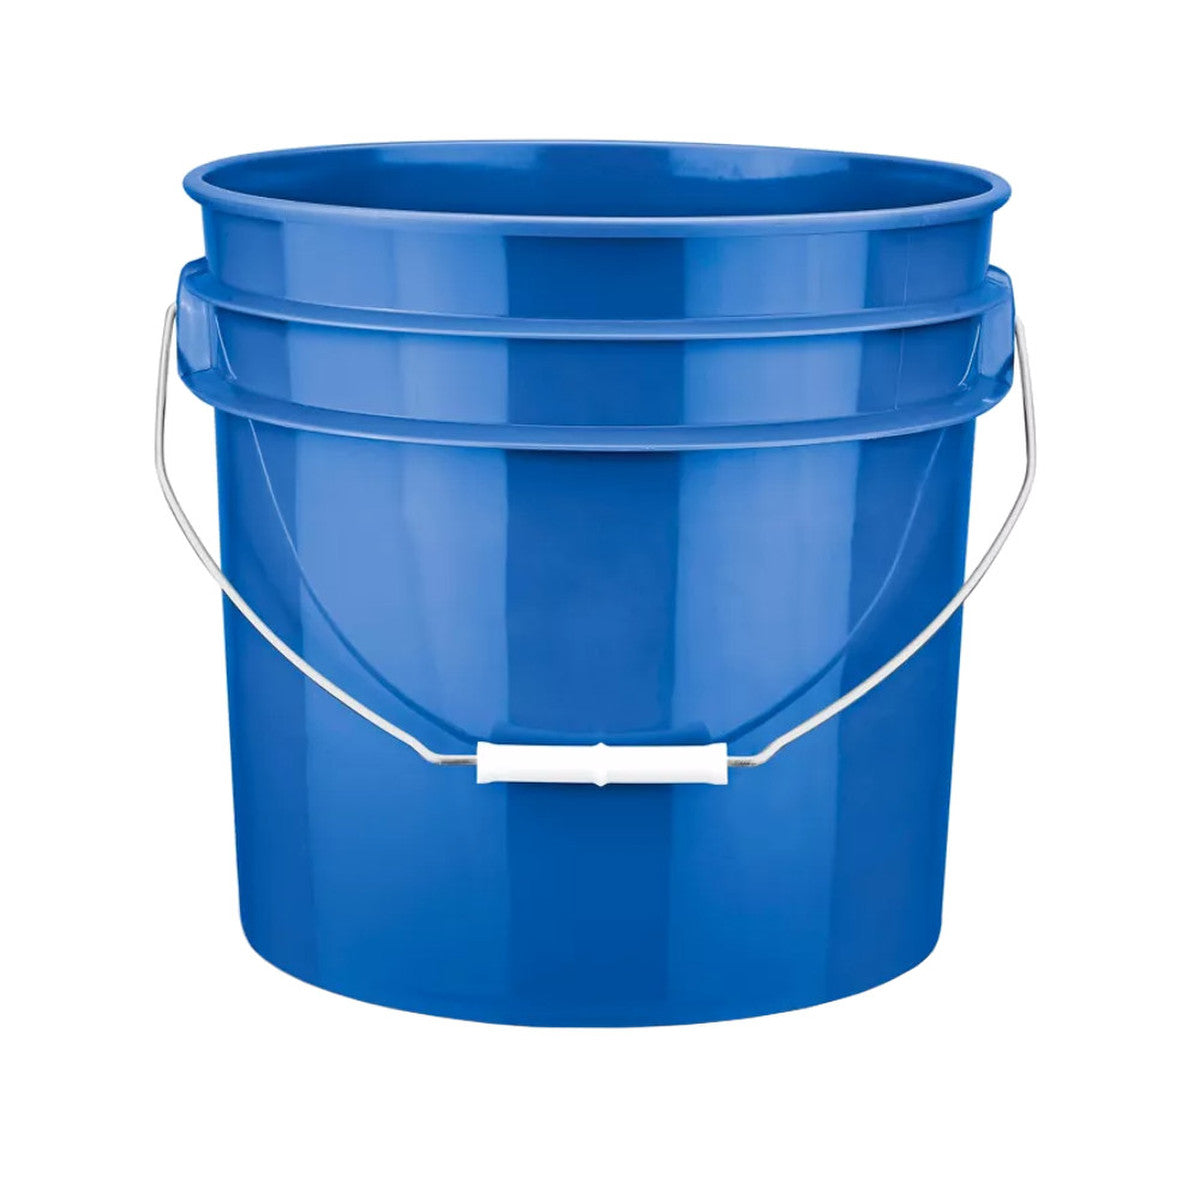 Window Cleaning Supplies, 3 1/2 Gallon Round Bucket